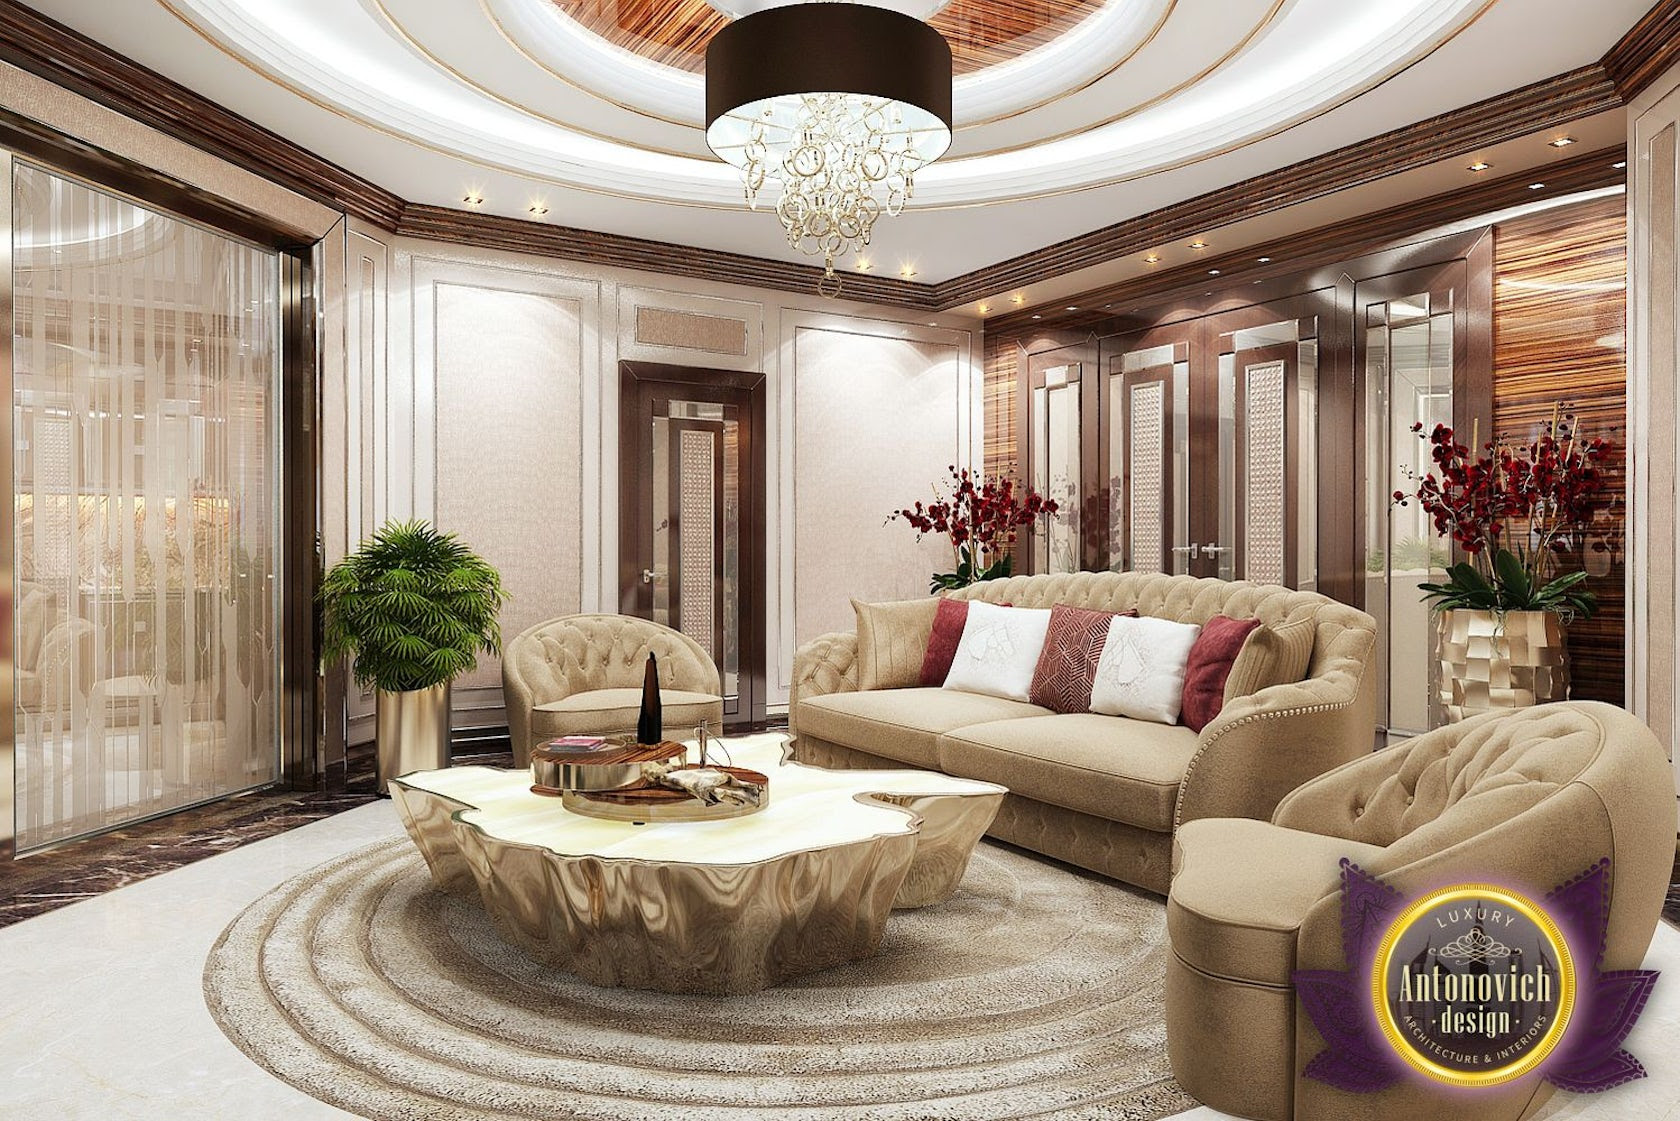 In decorations, interior design, living room. Living Room Design In Nigeria Abuja By Luxury Antonovich Design Architizer